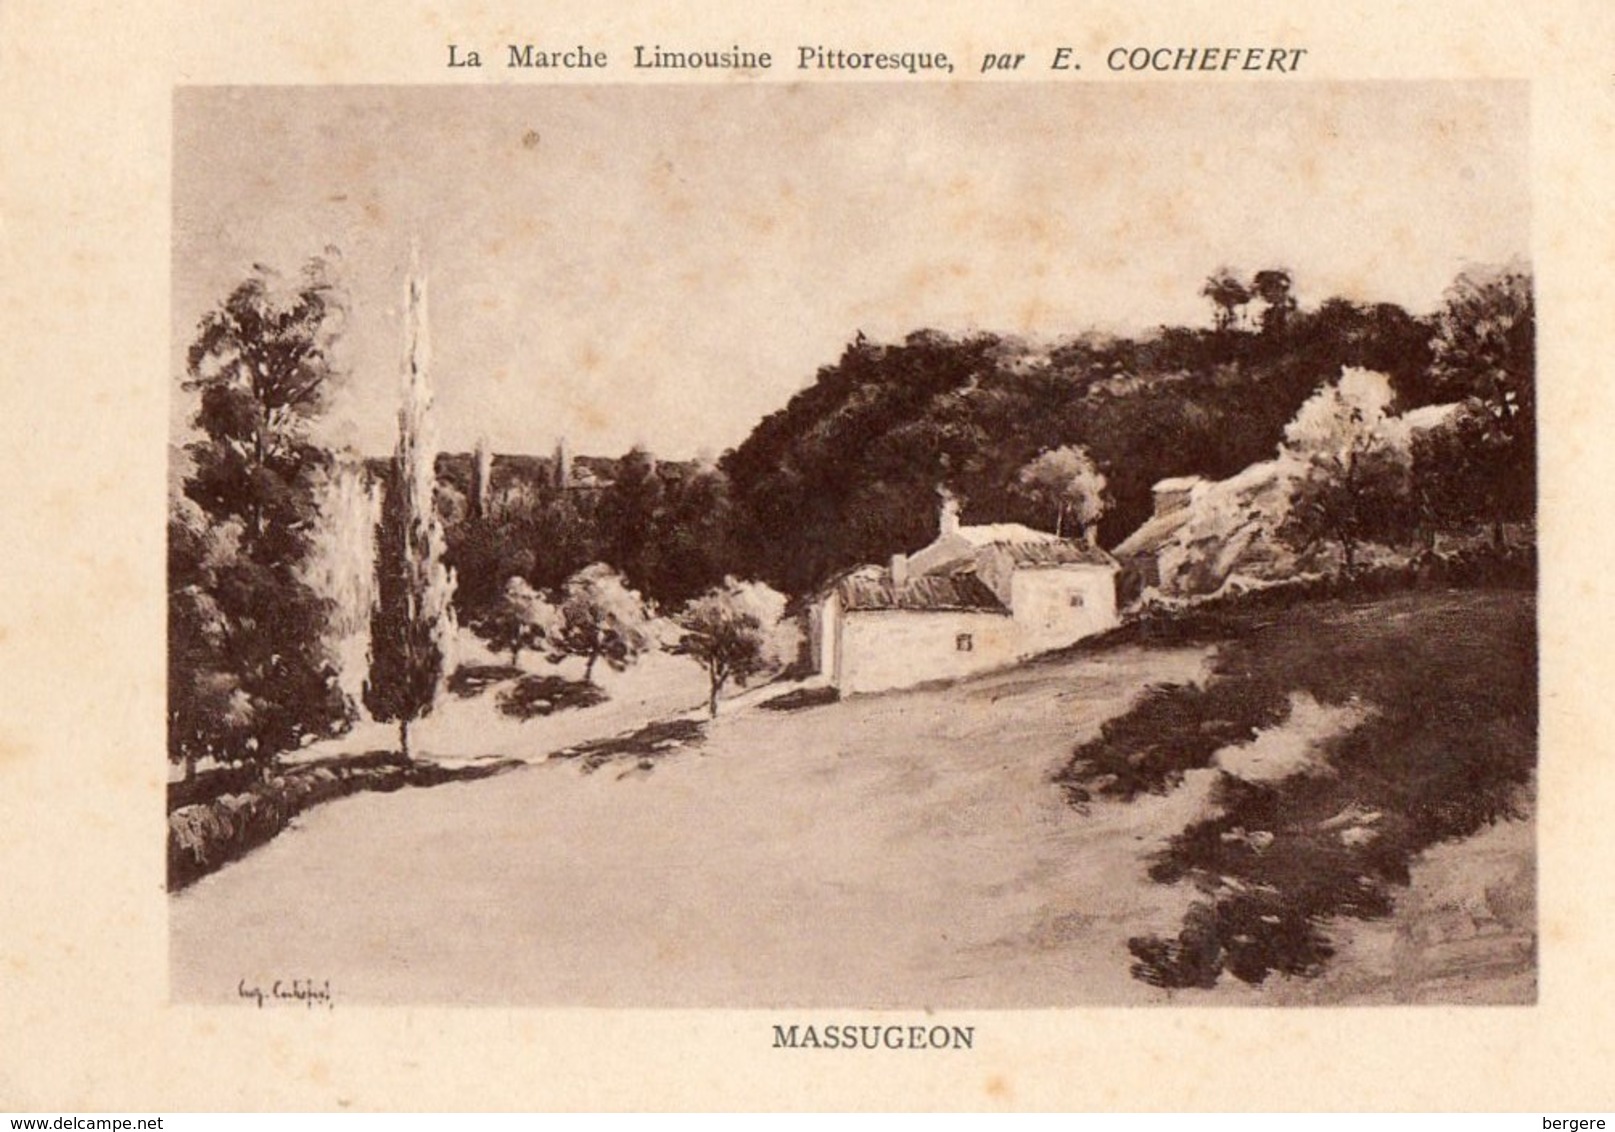 87. CPA. MASSUGEON BUSSIERE POITEVINE, Par Cochefert. Le Village. 1951. - Bussiere Poitevine